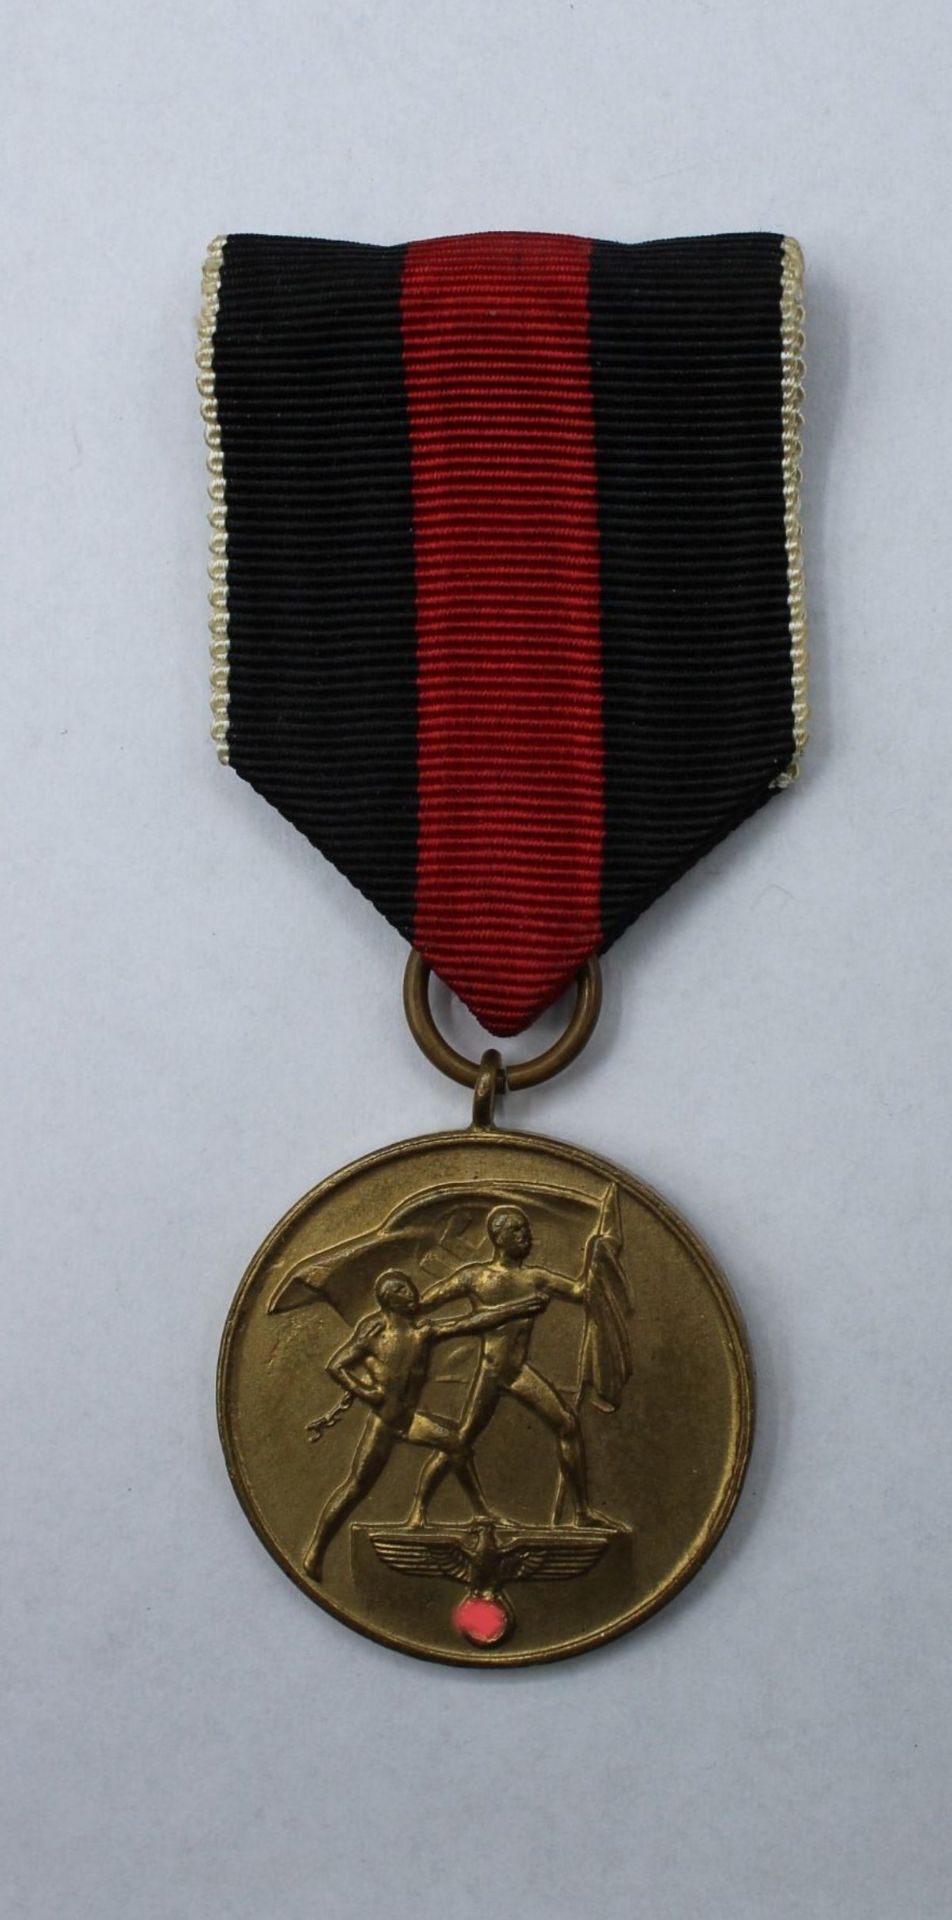 Erinnerungs-Medaille 1. Mai, am Band, 3. Reich.